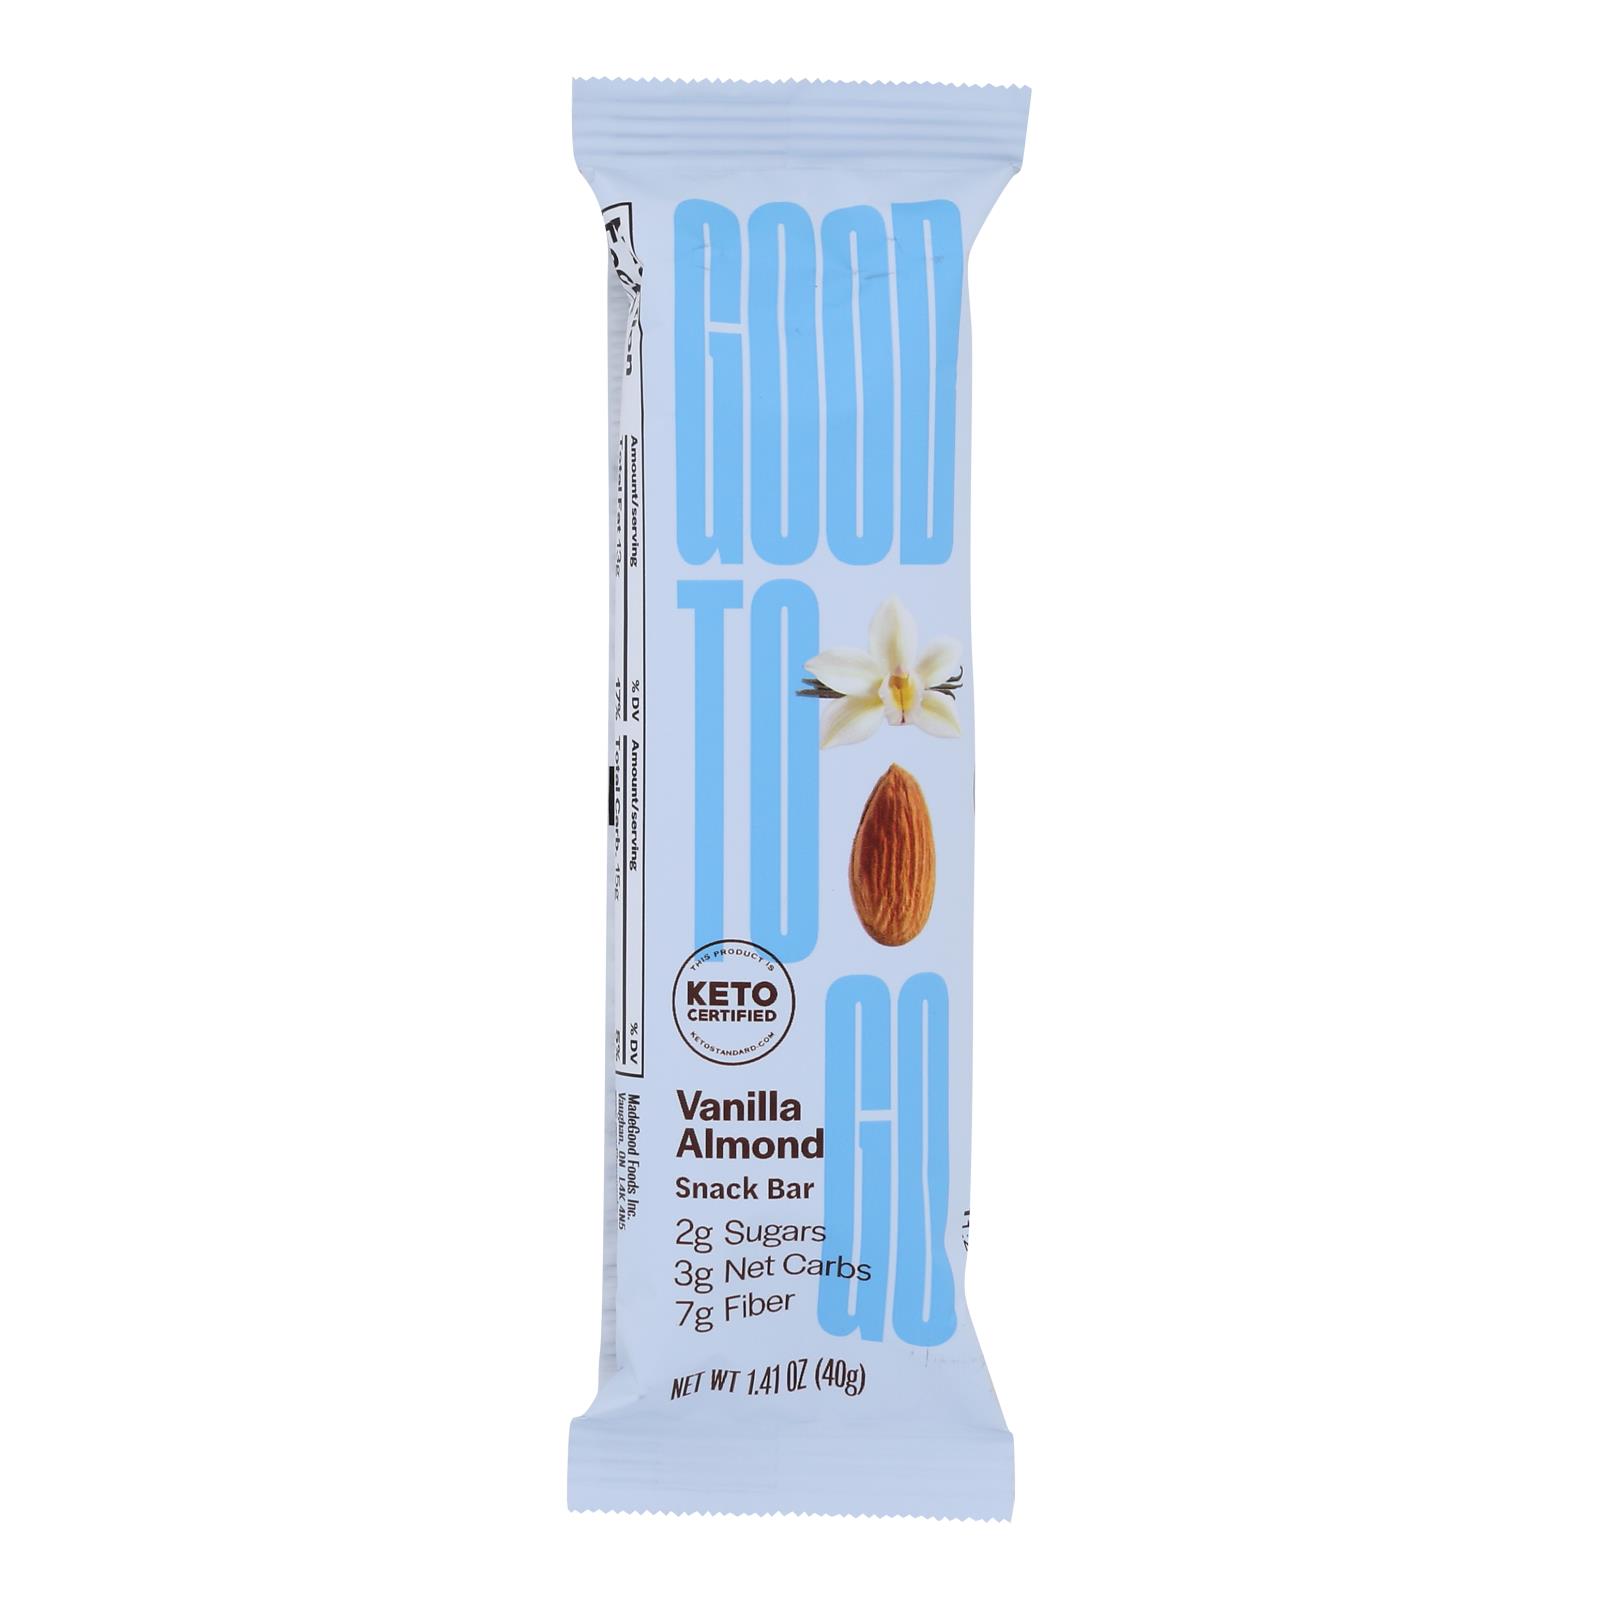 Good To Go - Keto Snack Bar Vanilla Almond - 9개 묶음상품 - 1.41 OZ